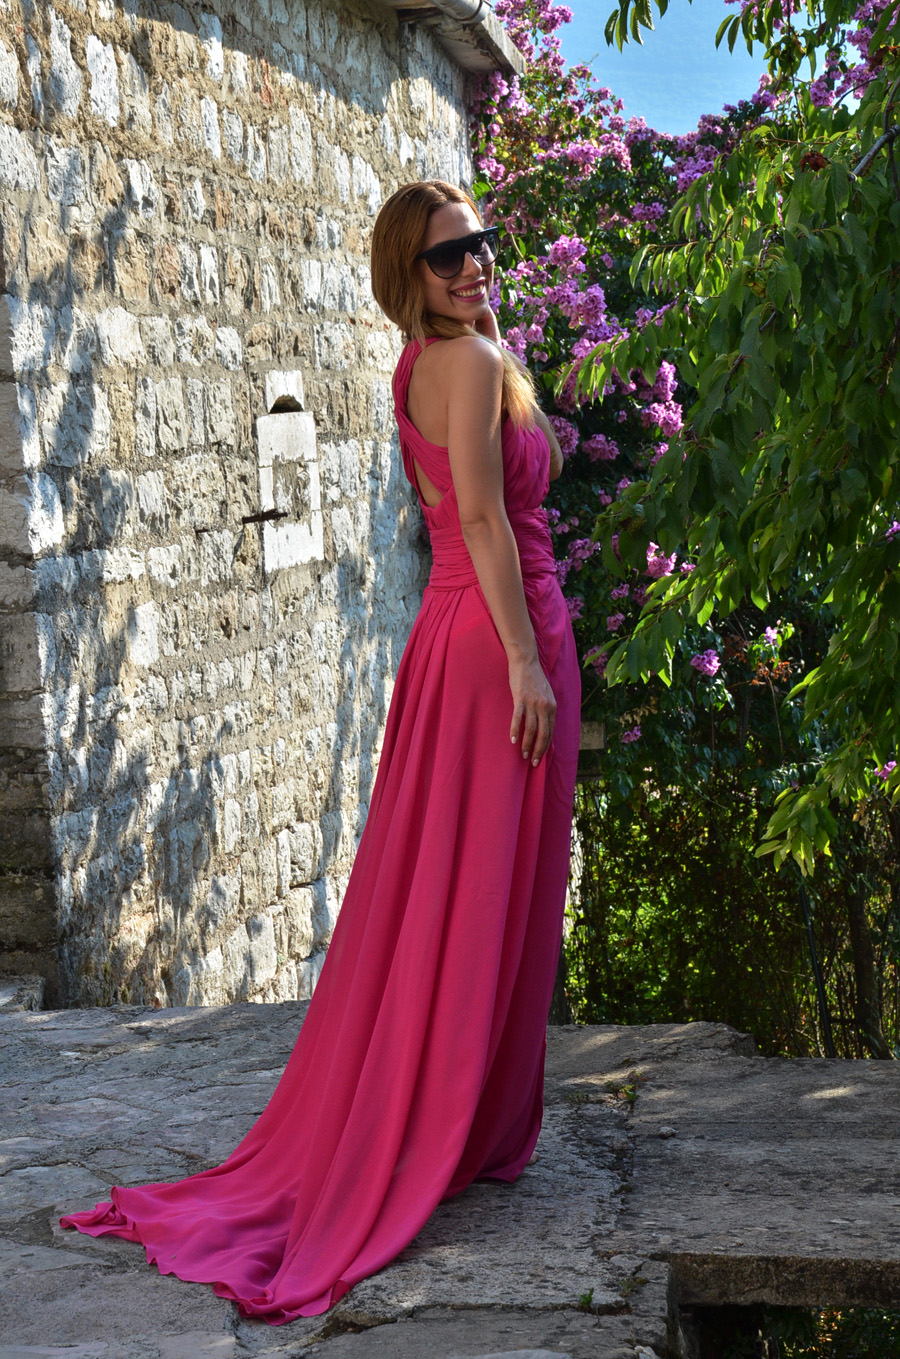 Fuschia pink dress / Stasha Fashion blog by Anastasija